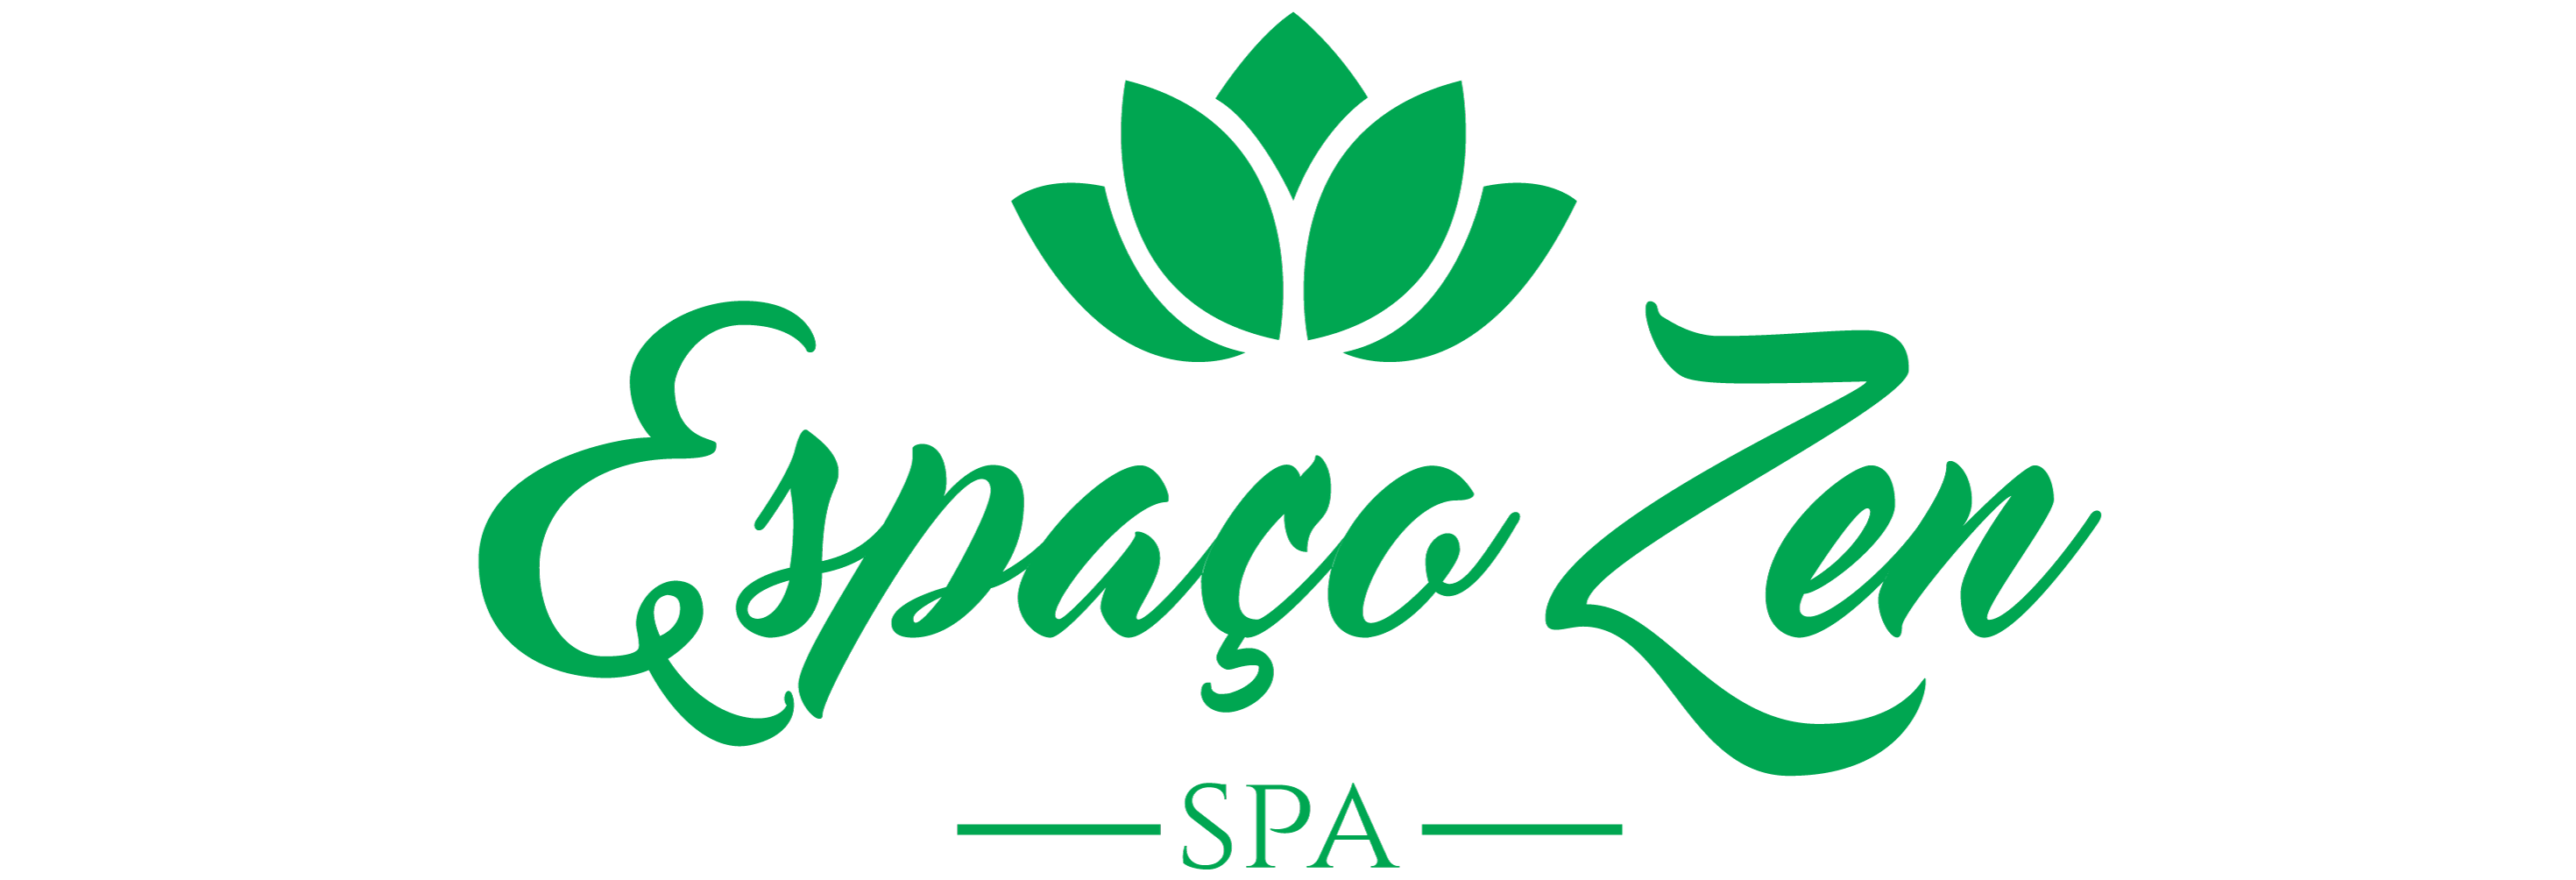 Zen Spa Logo - Day Spa Romântico